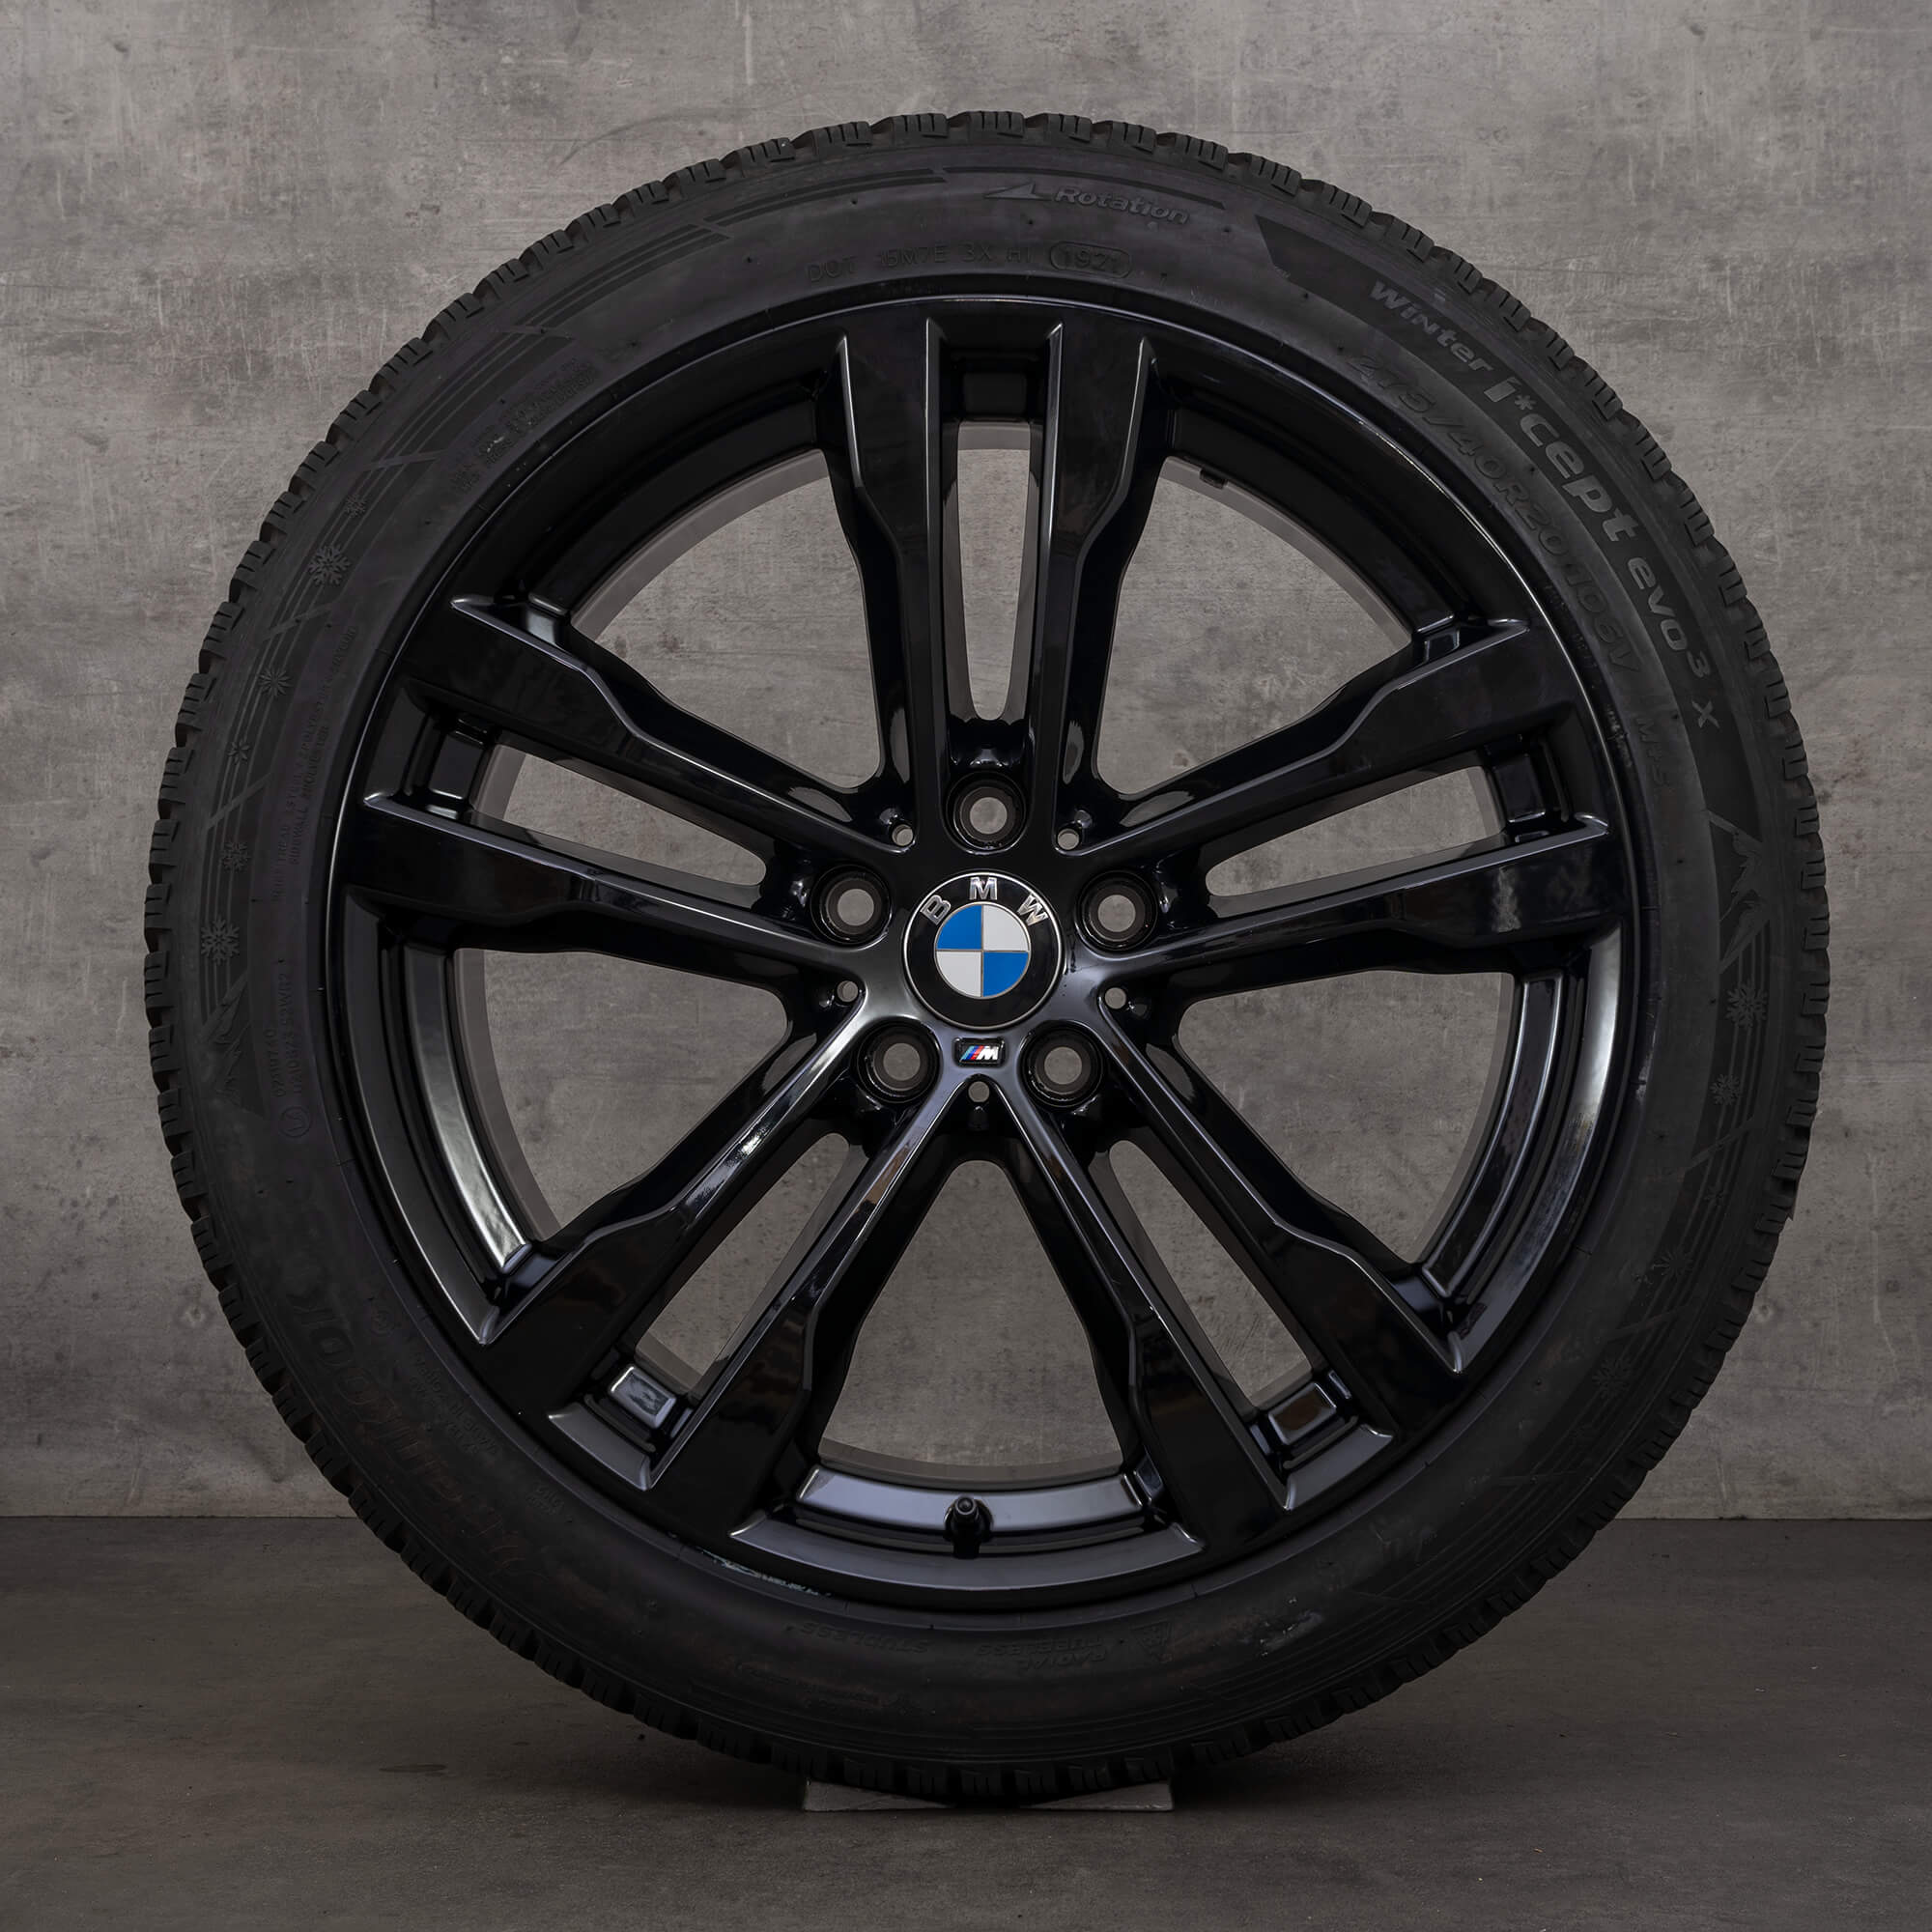 BMW X5 E70 F15 X6 F16 kompletni zimni alu kola 20 palcové pneumatiky ráfky 468 M